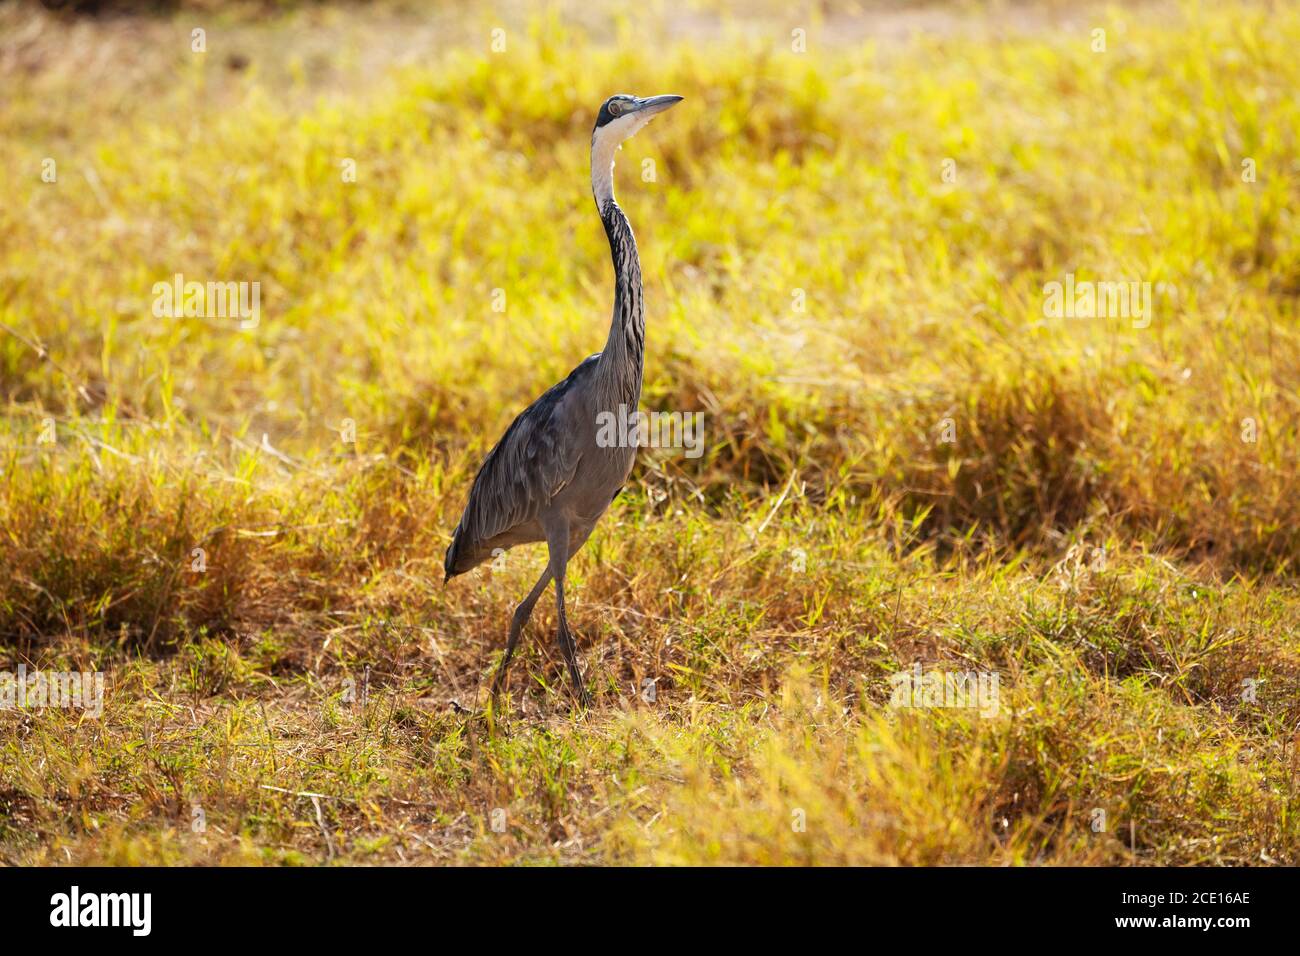 Ciconiiformes stork Great Blue Heron or Ardea Herodias in Kenya park bird in the natural environment Stock Photo